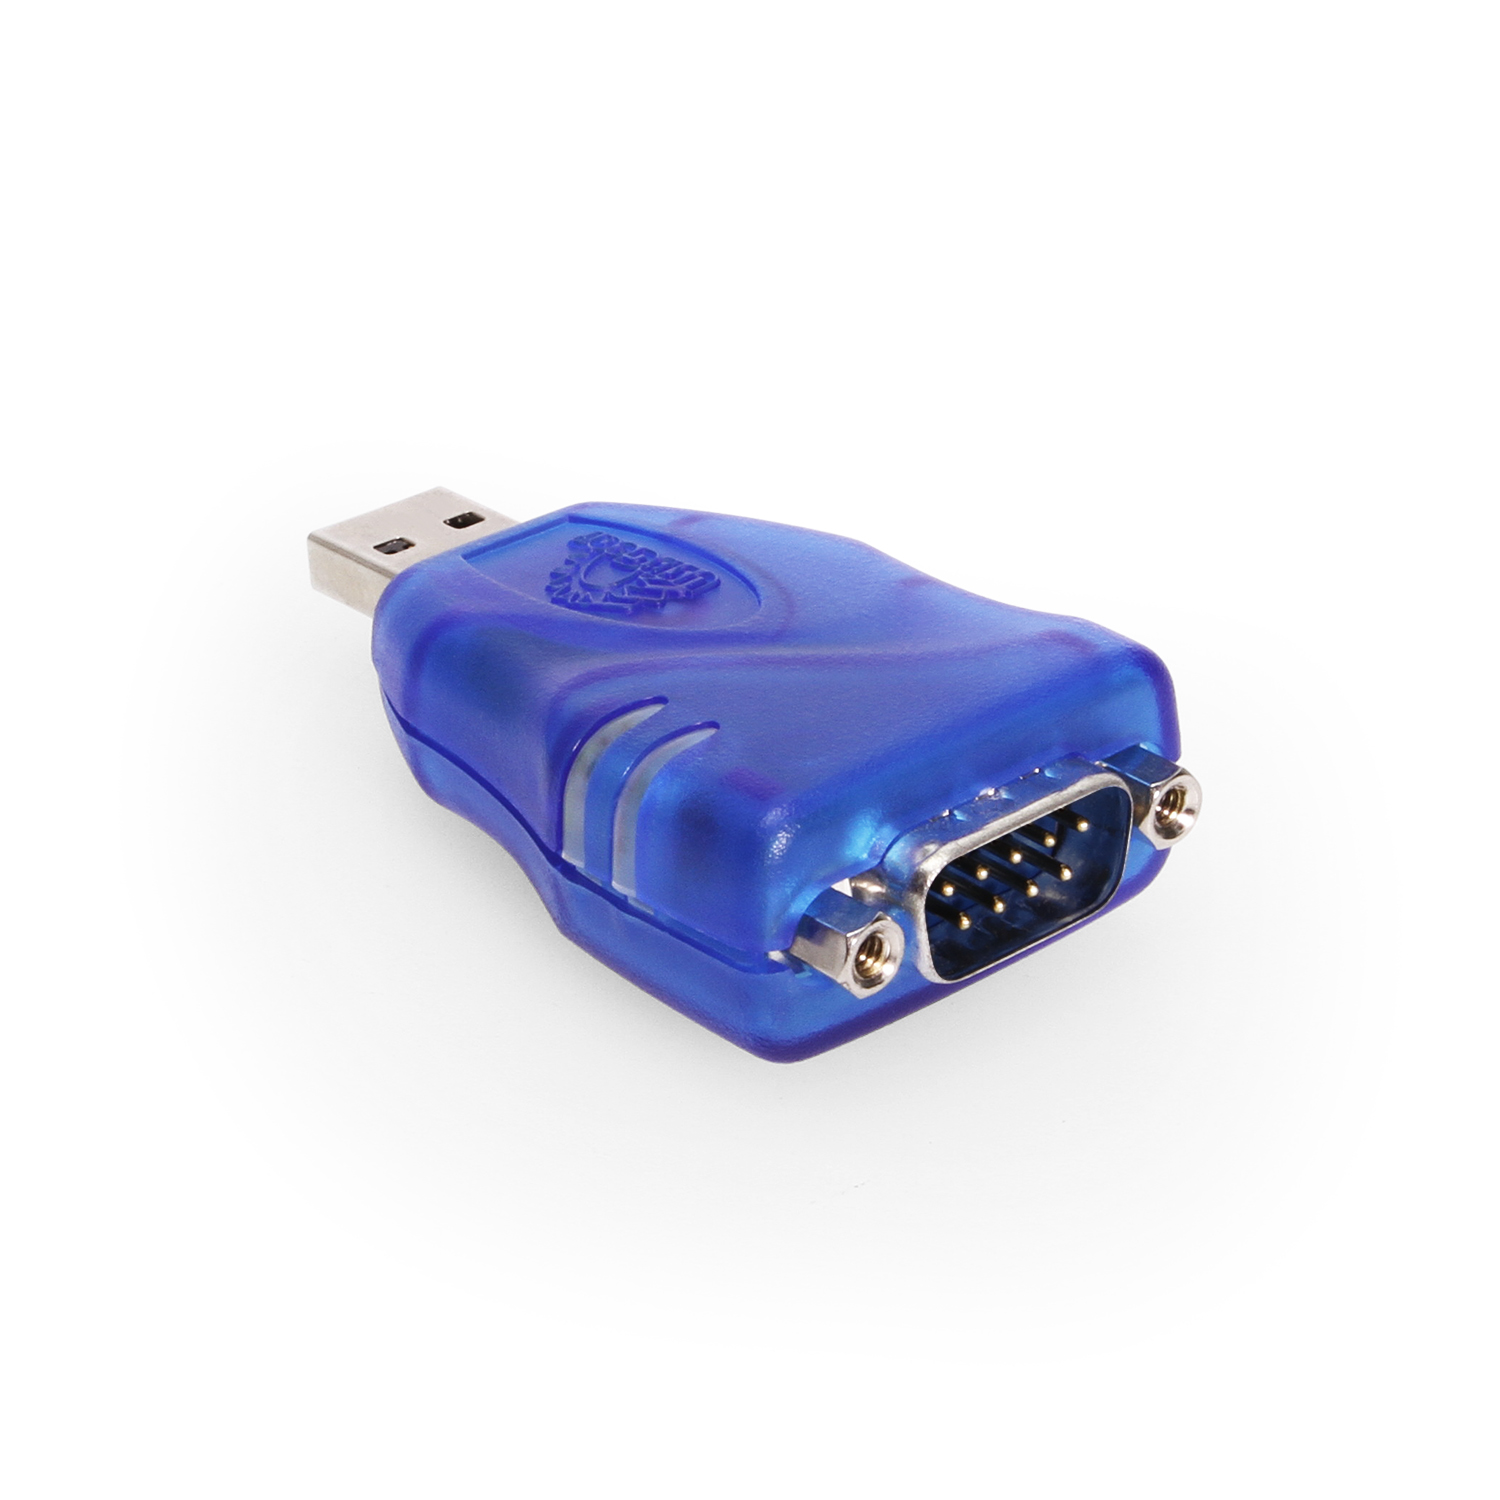 RS PRO USB 2.0 Cable, Male Mini USB A to Male Mini USB B